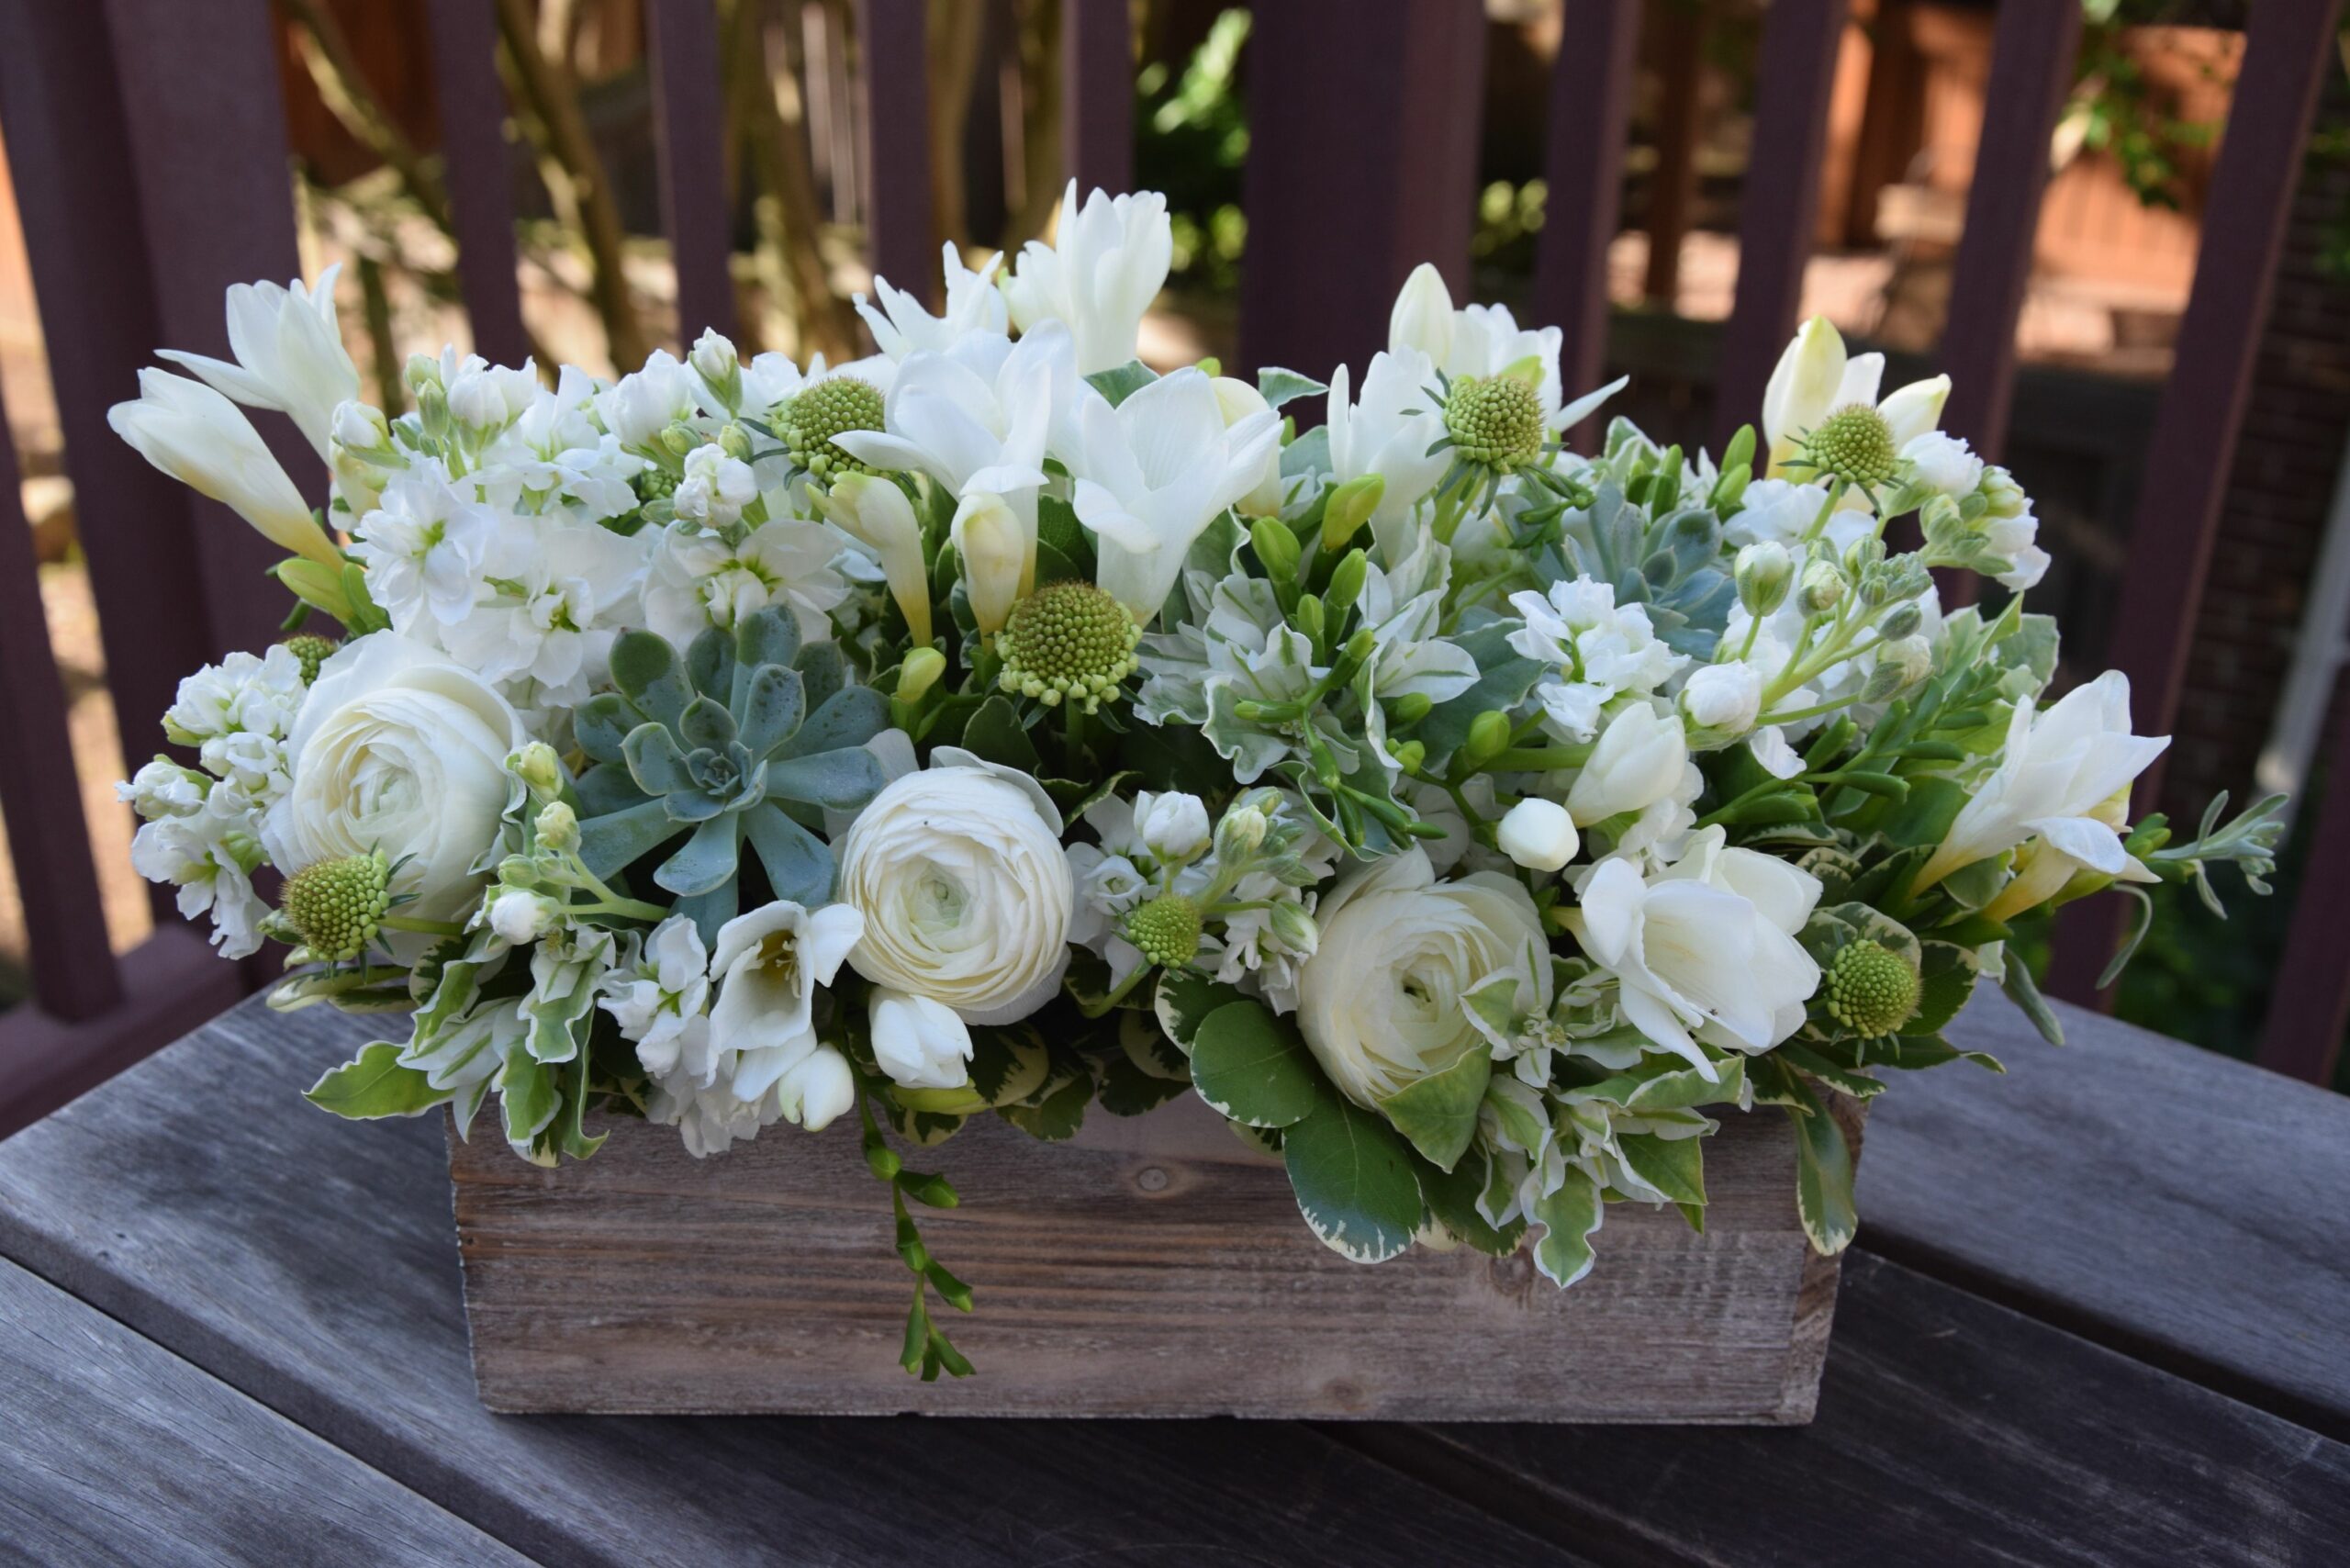 10 Jenis Bunga Warna Putih Yang Cantik Untuk Hiasan Rumah